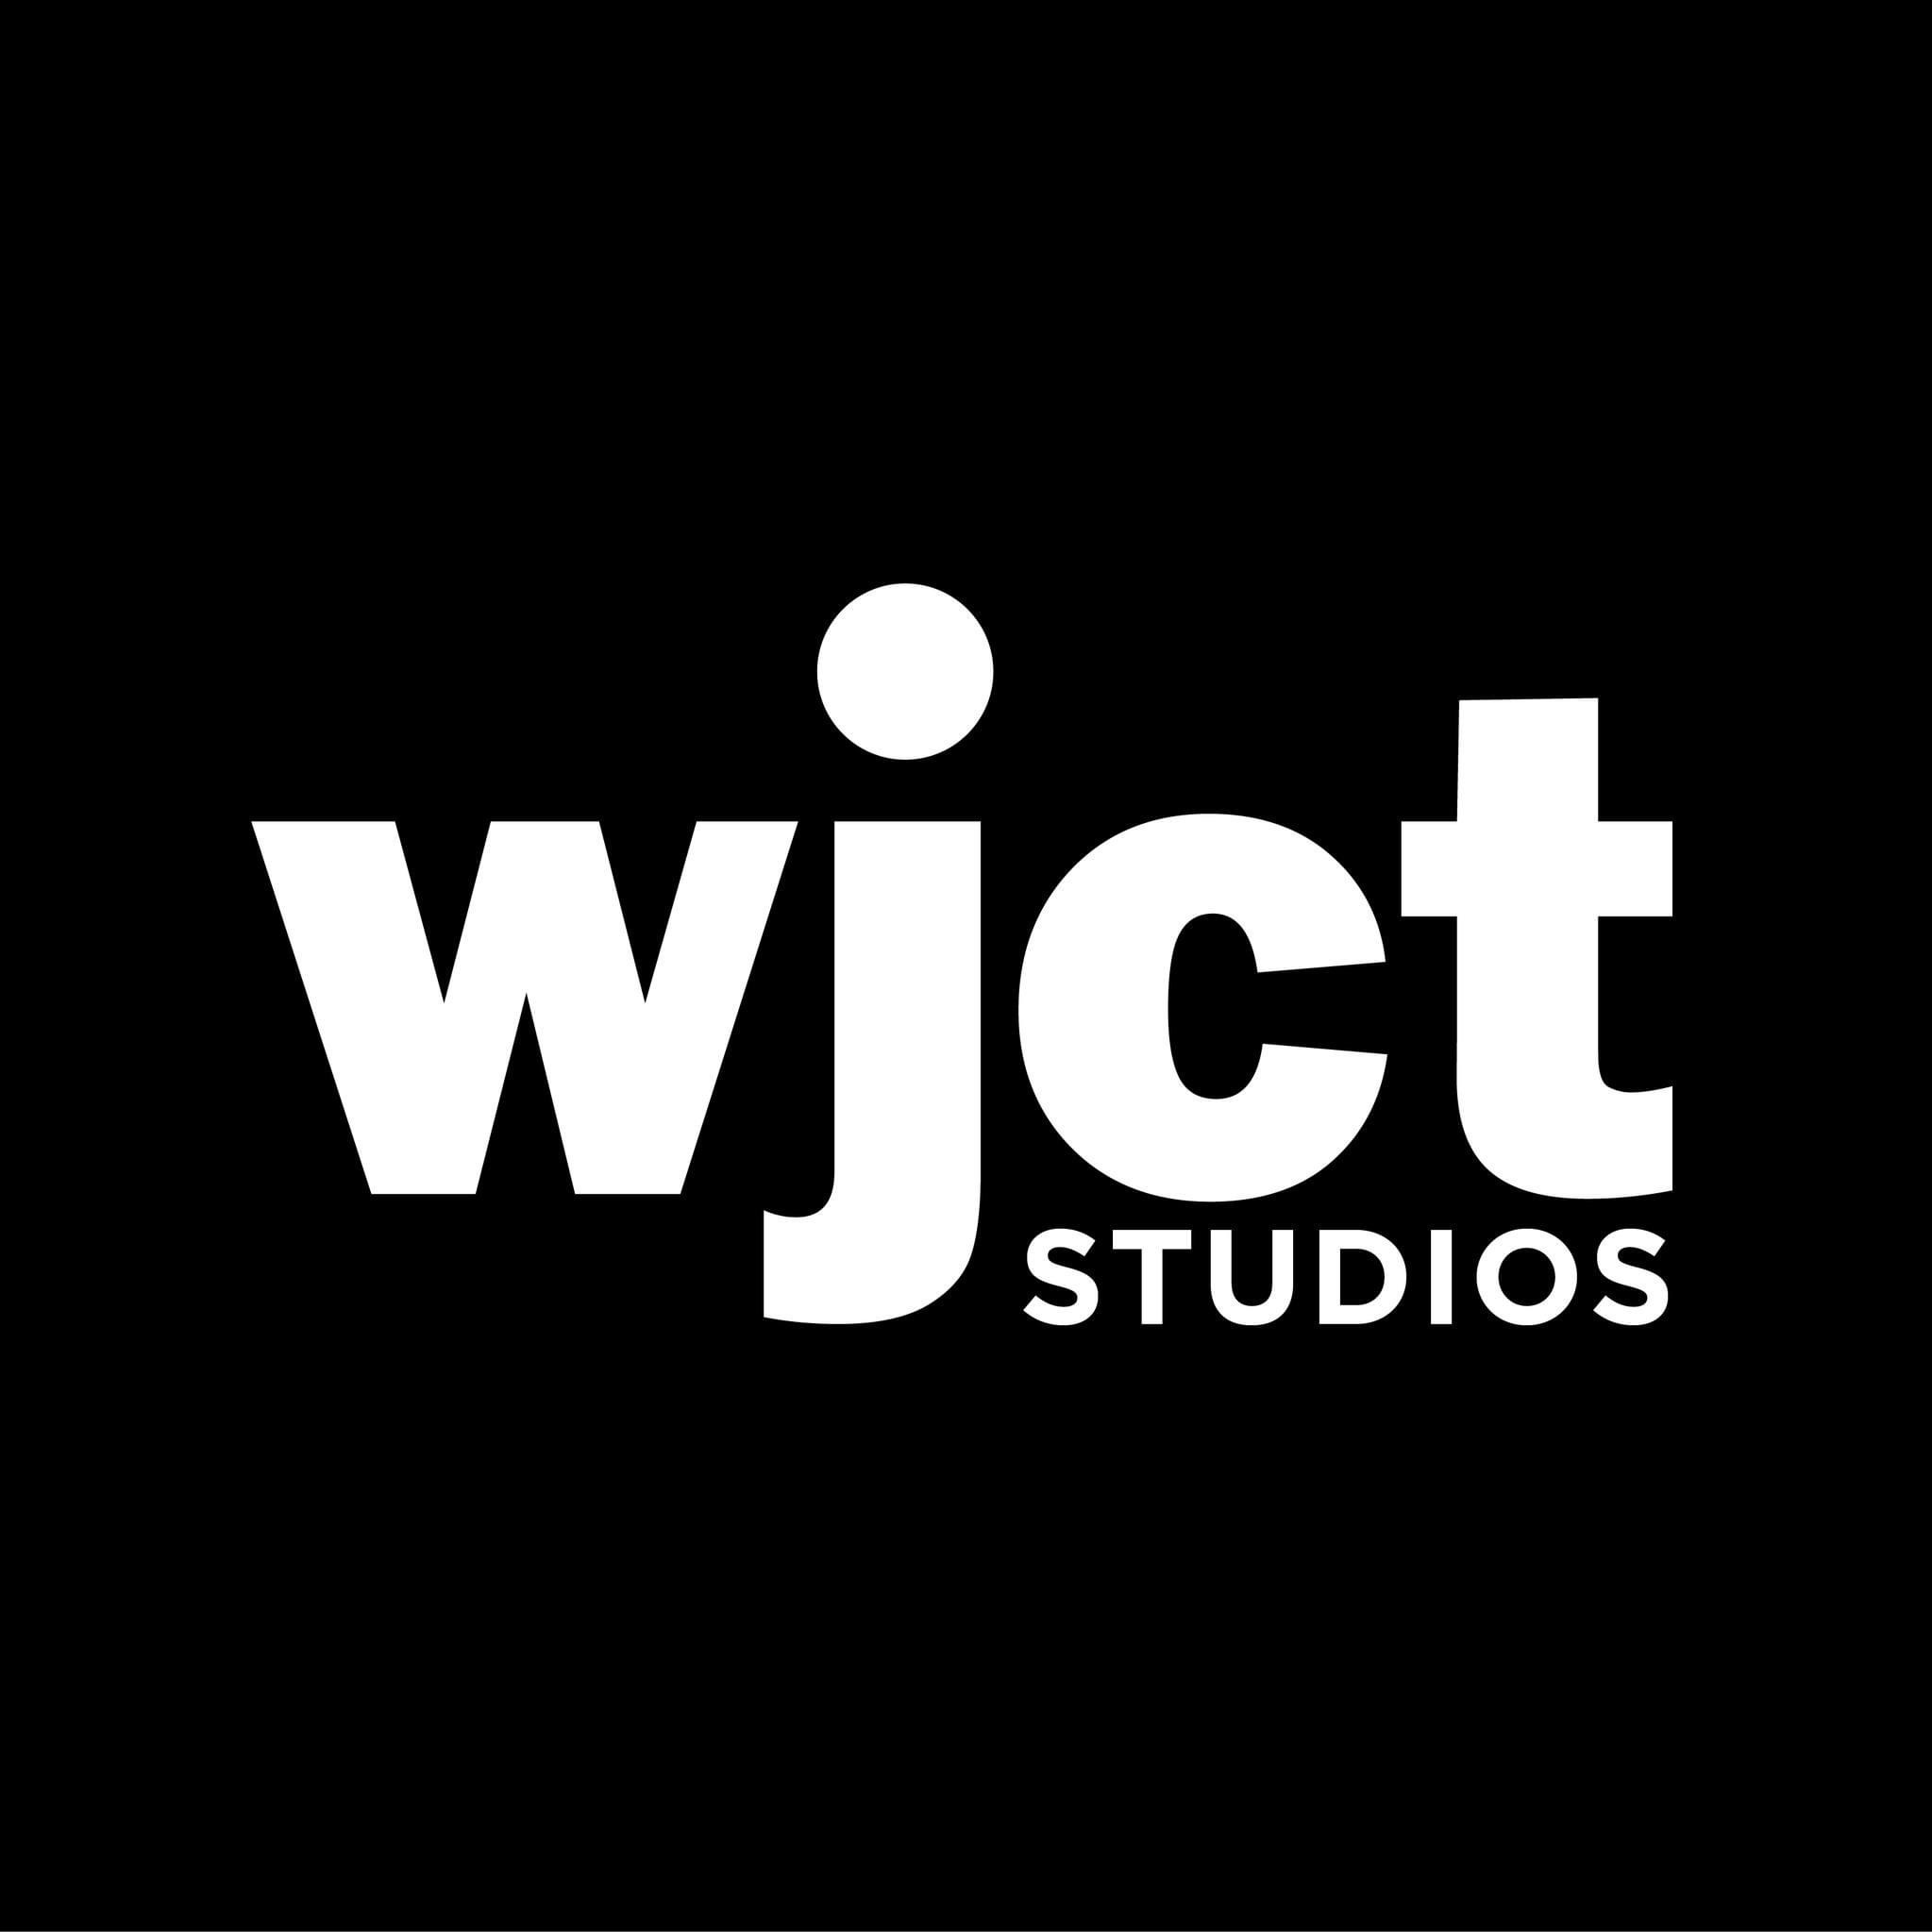 WJCT Studios